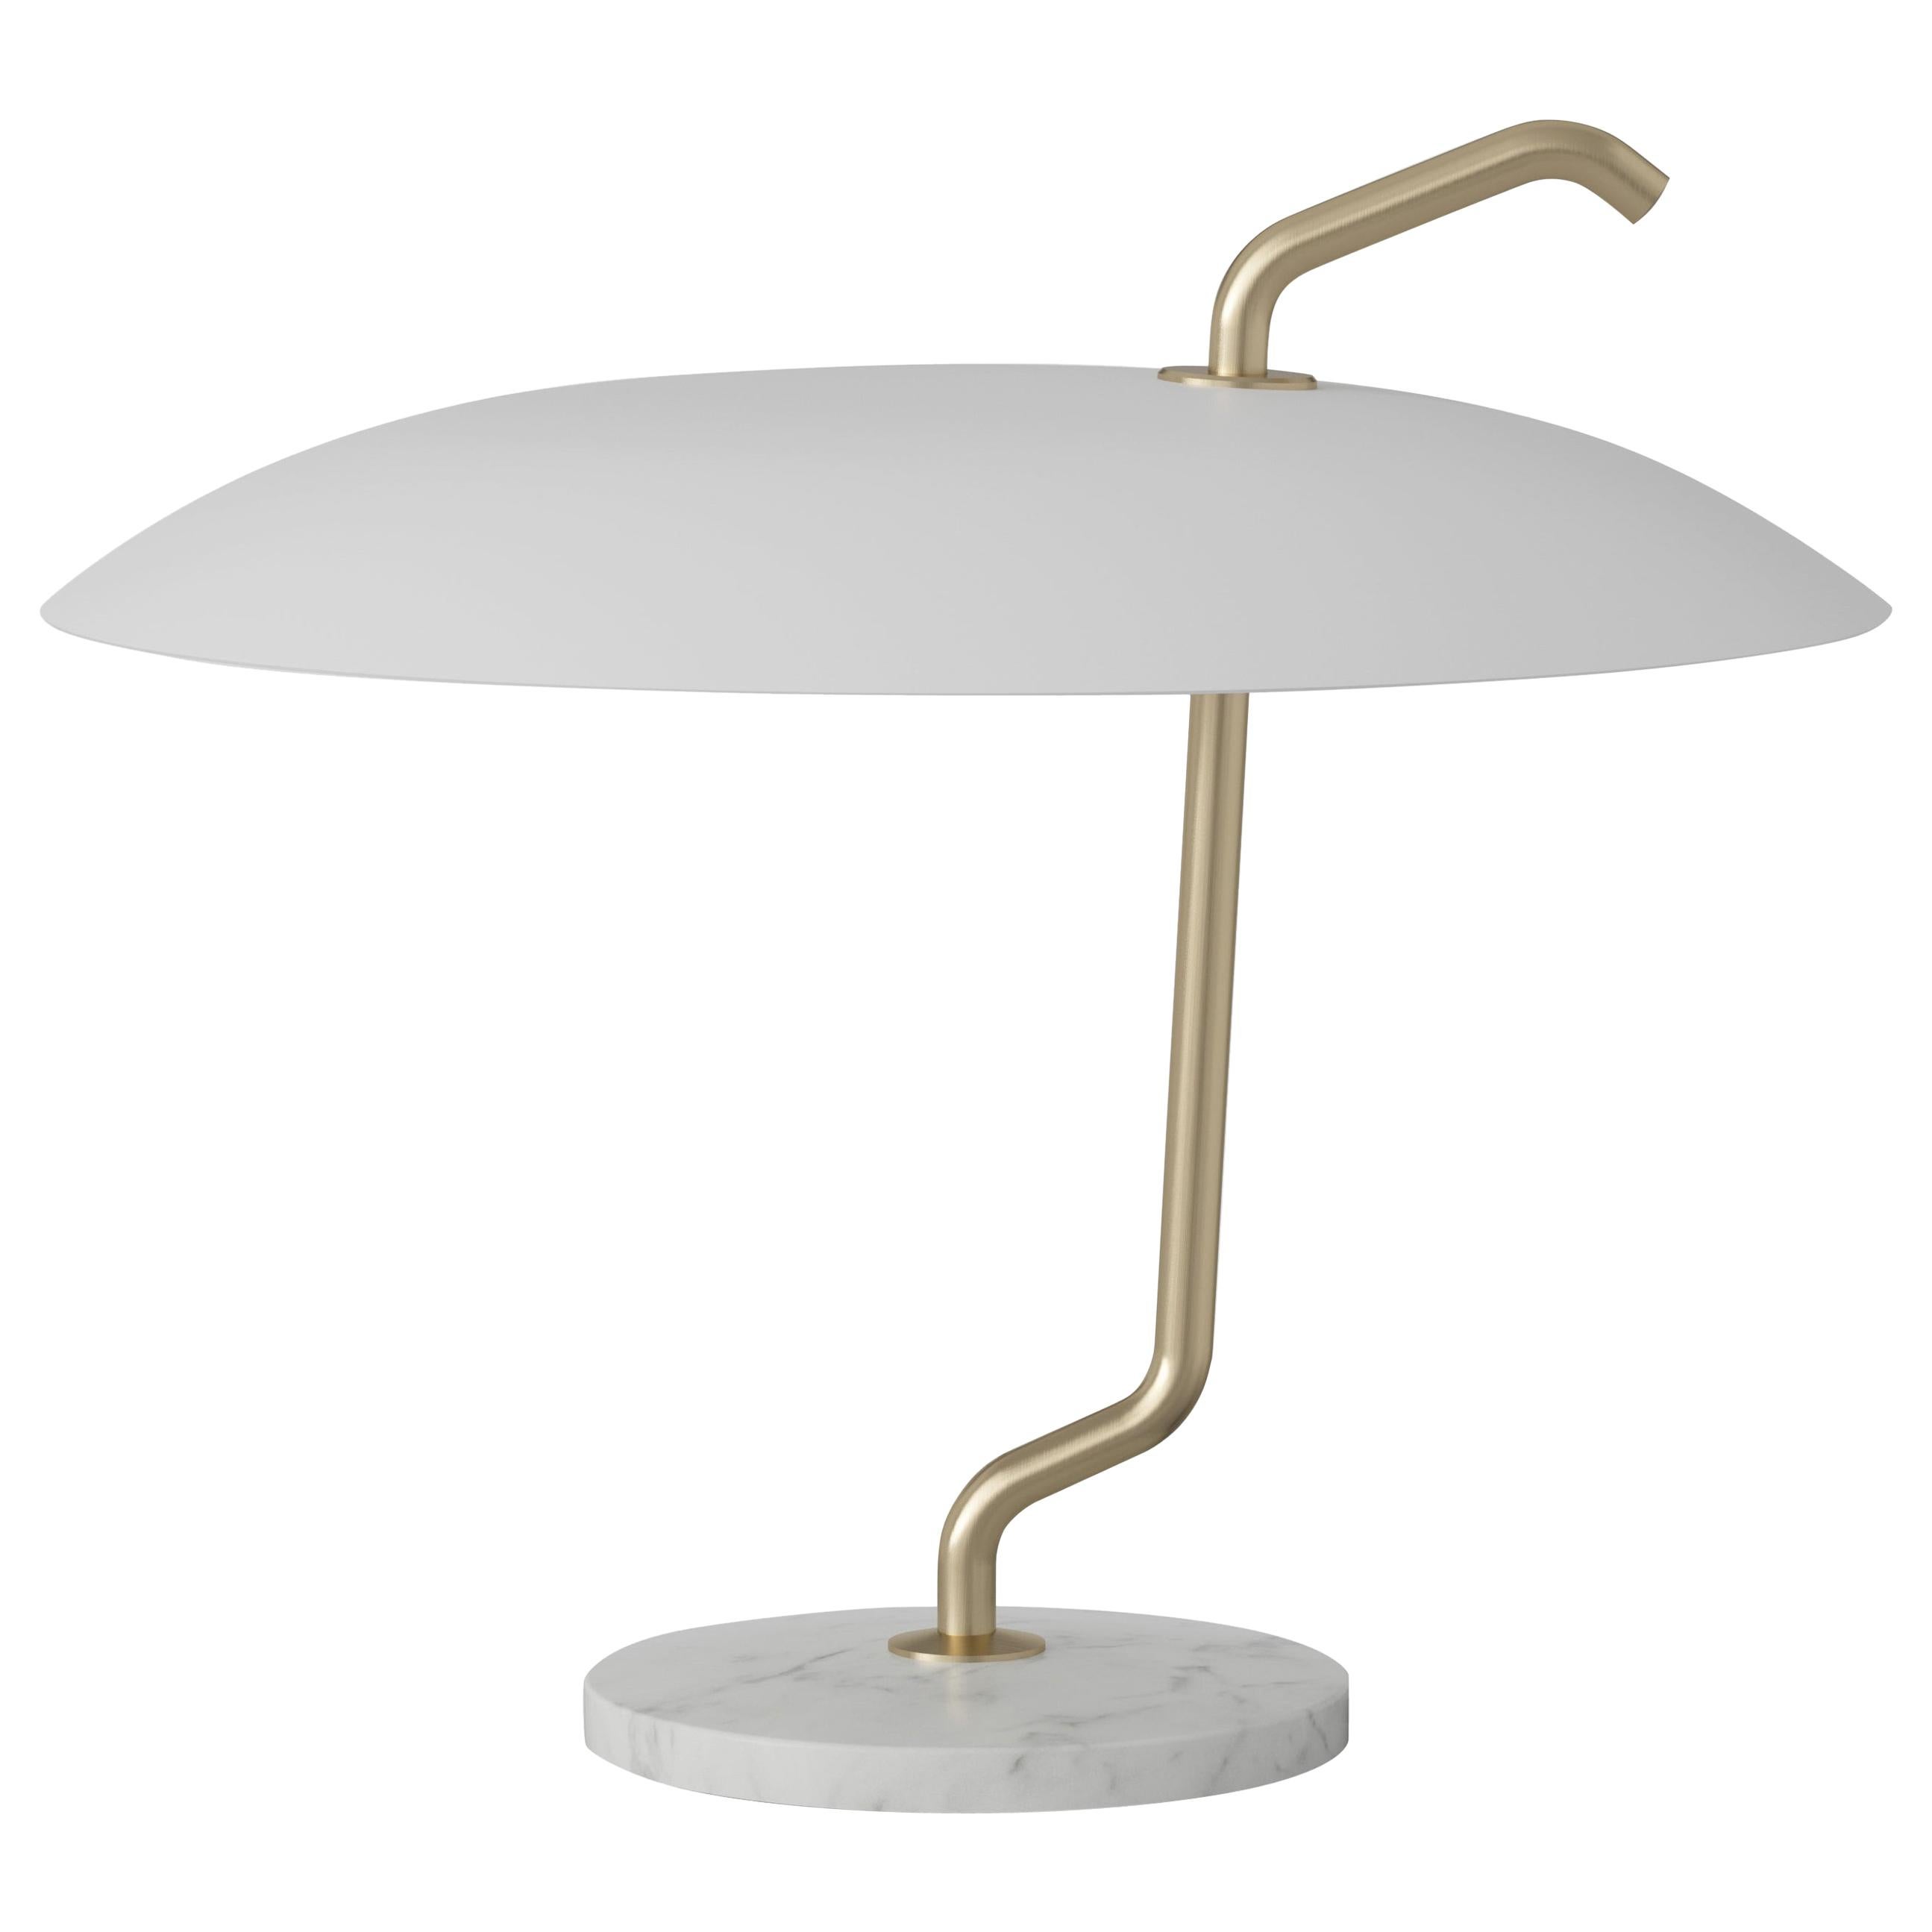 Gino Sarfatti Lamp Model 537 Brass Structure, White Reflector for Astep